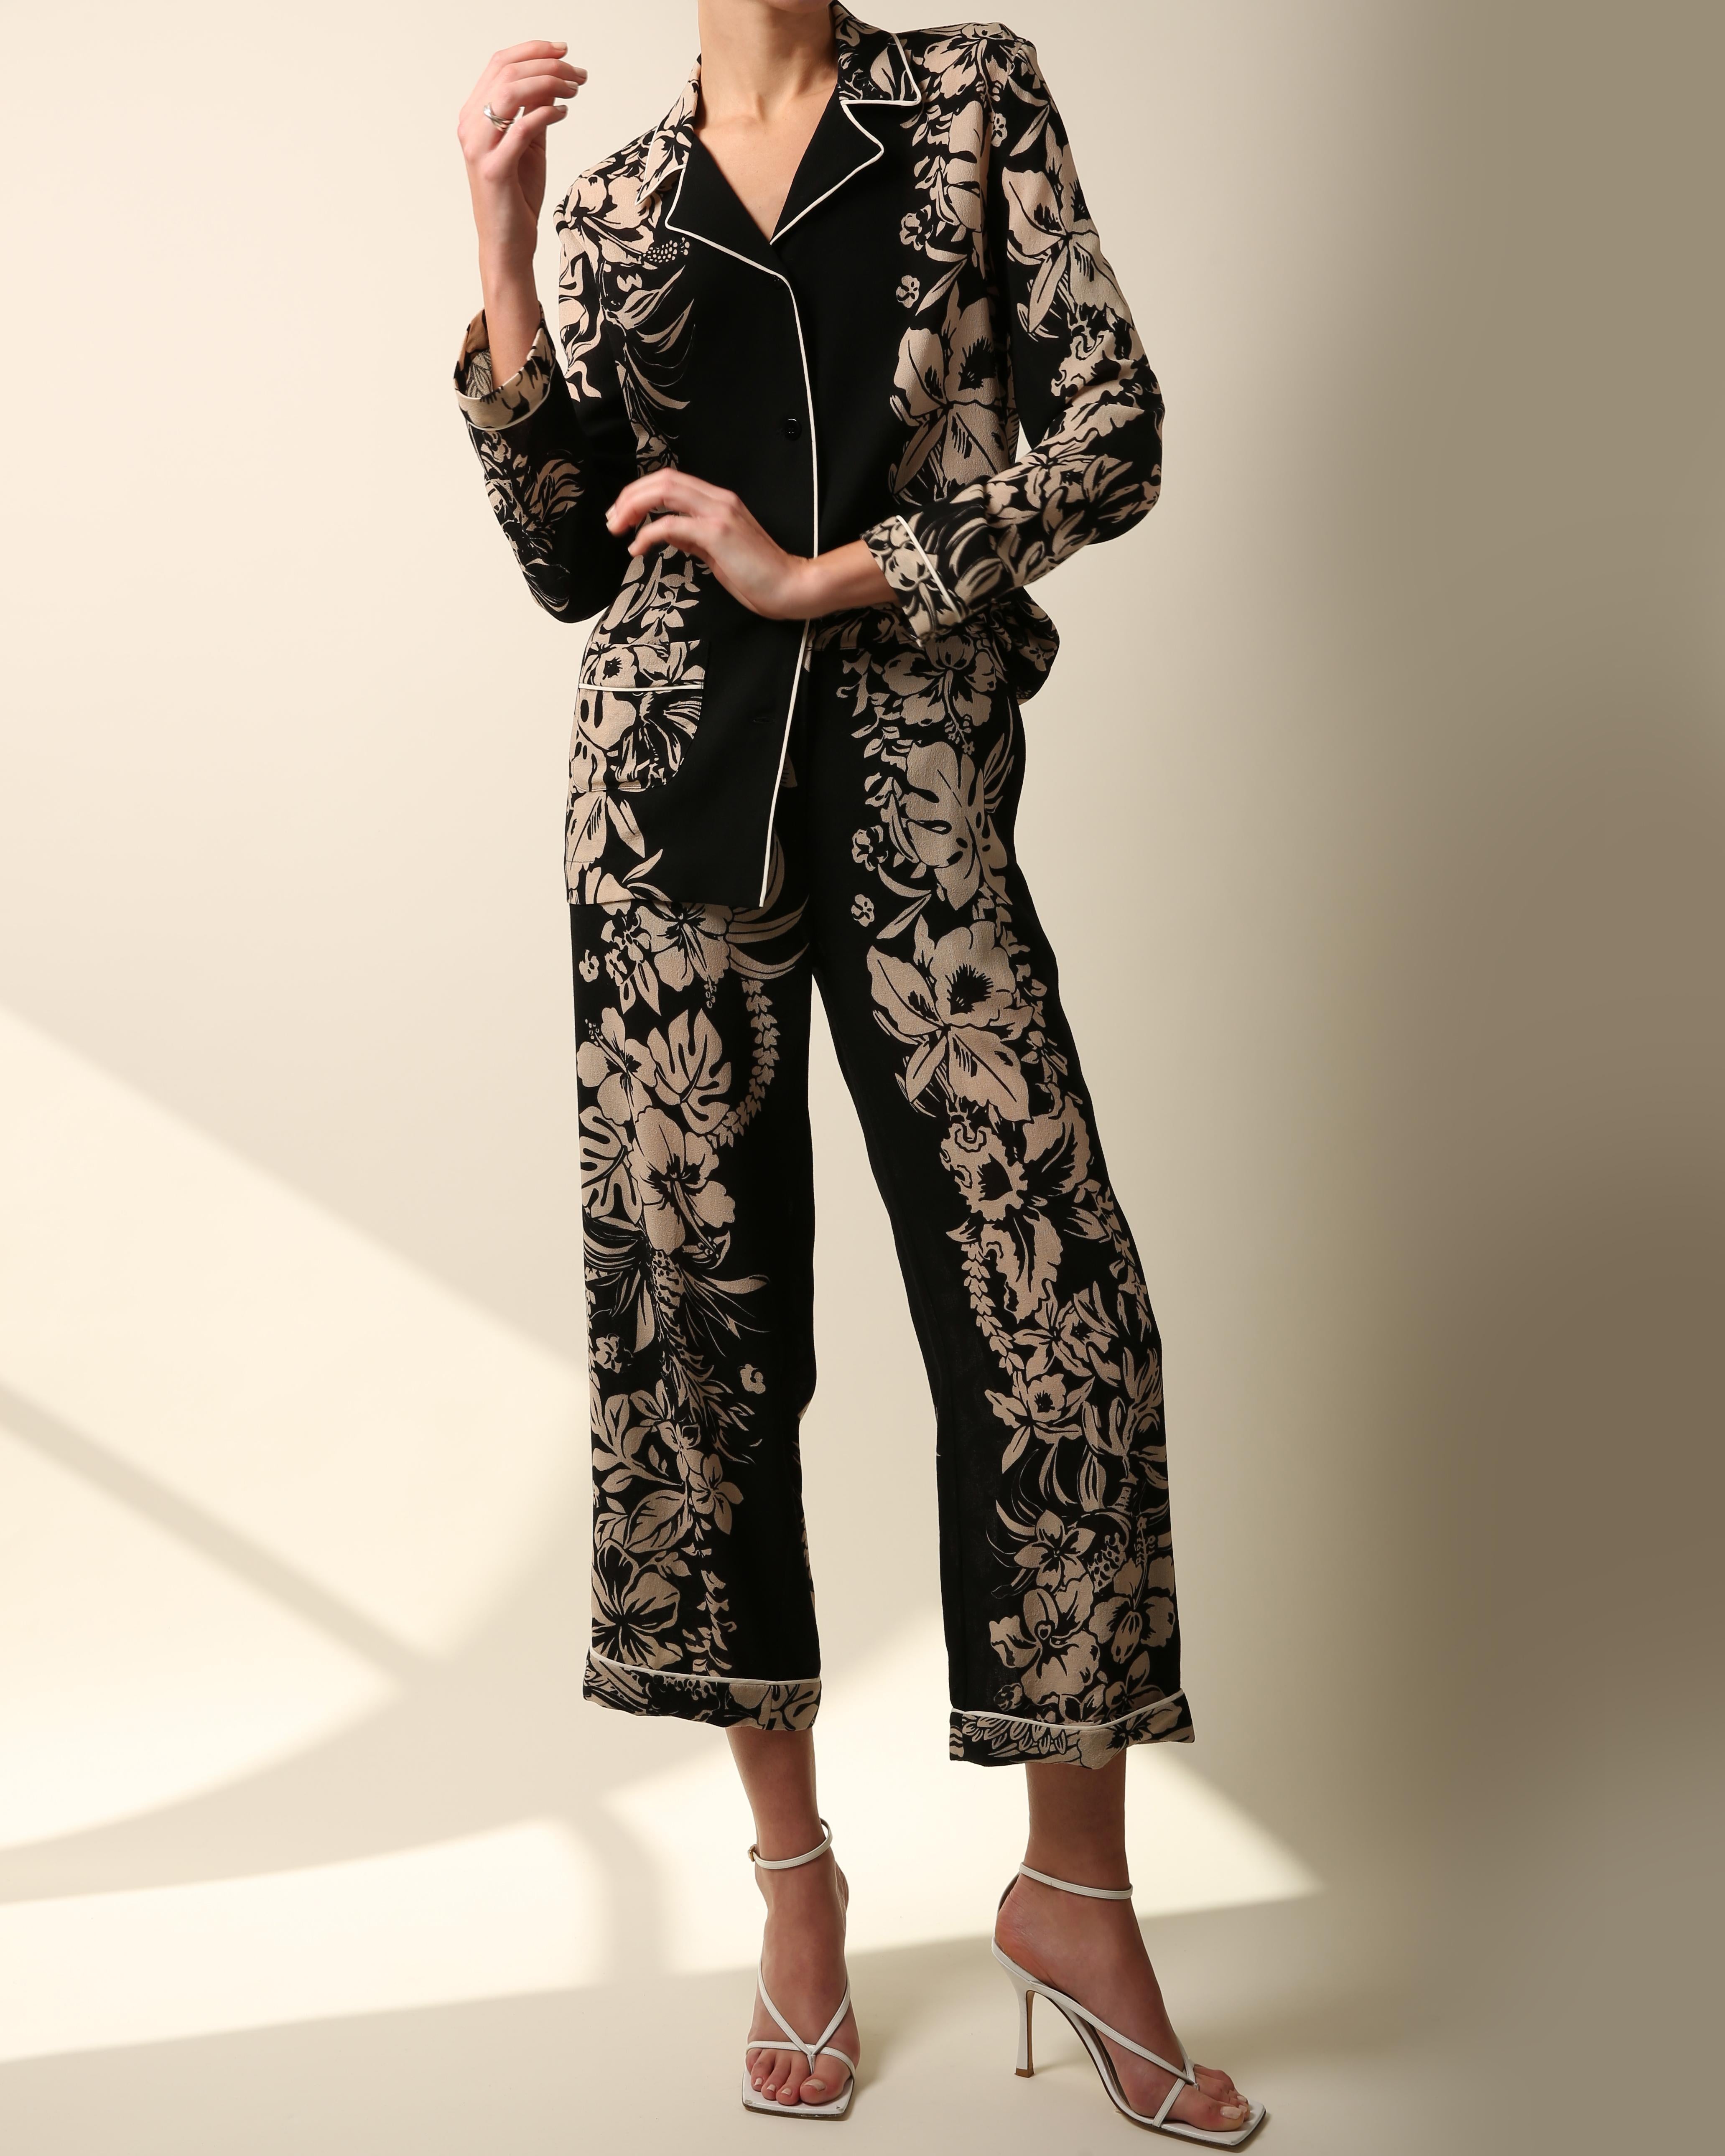 Valentino pyjama style black nude floral print blouse wide dress pants jumpsuit For Sale 2